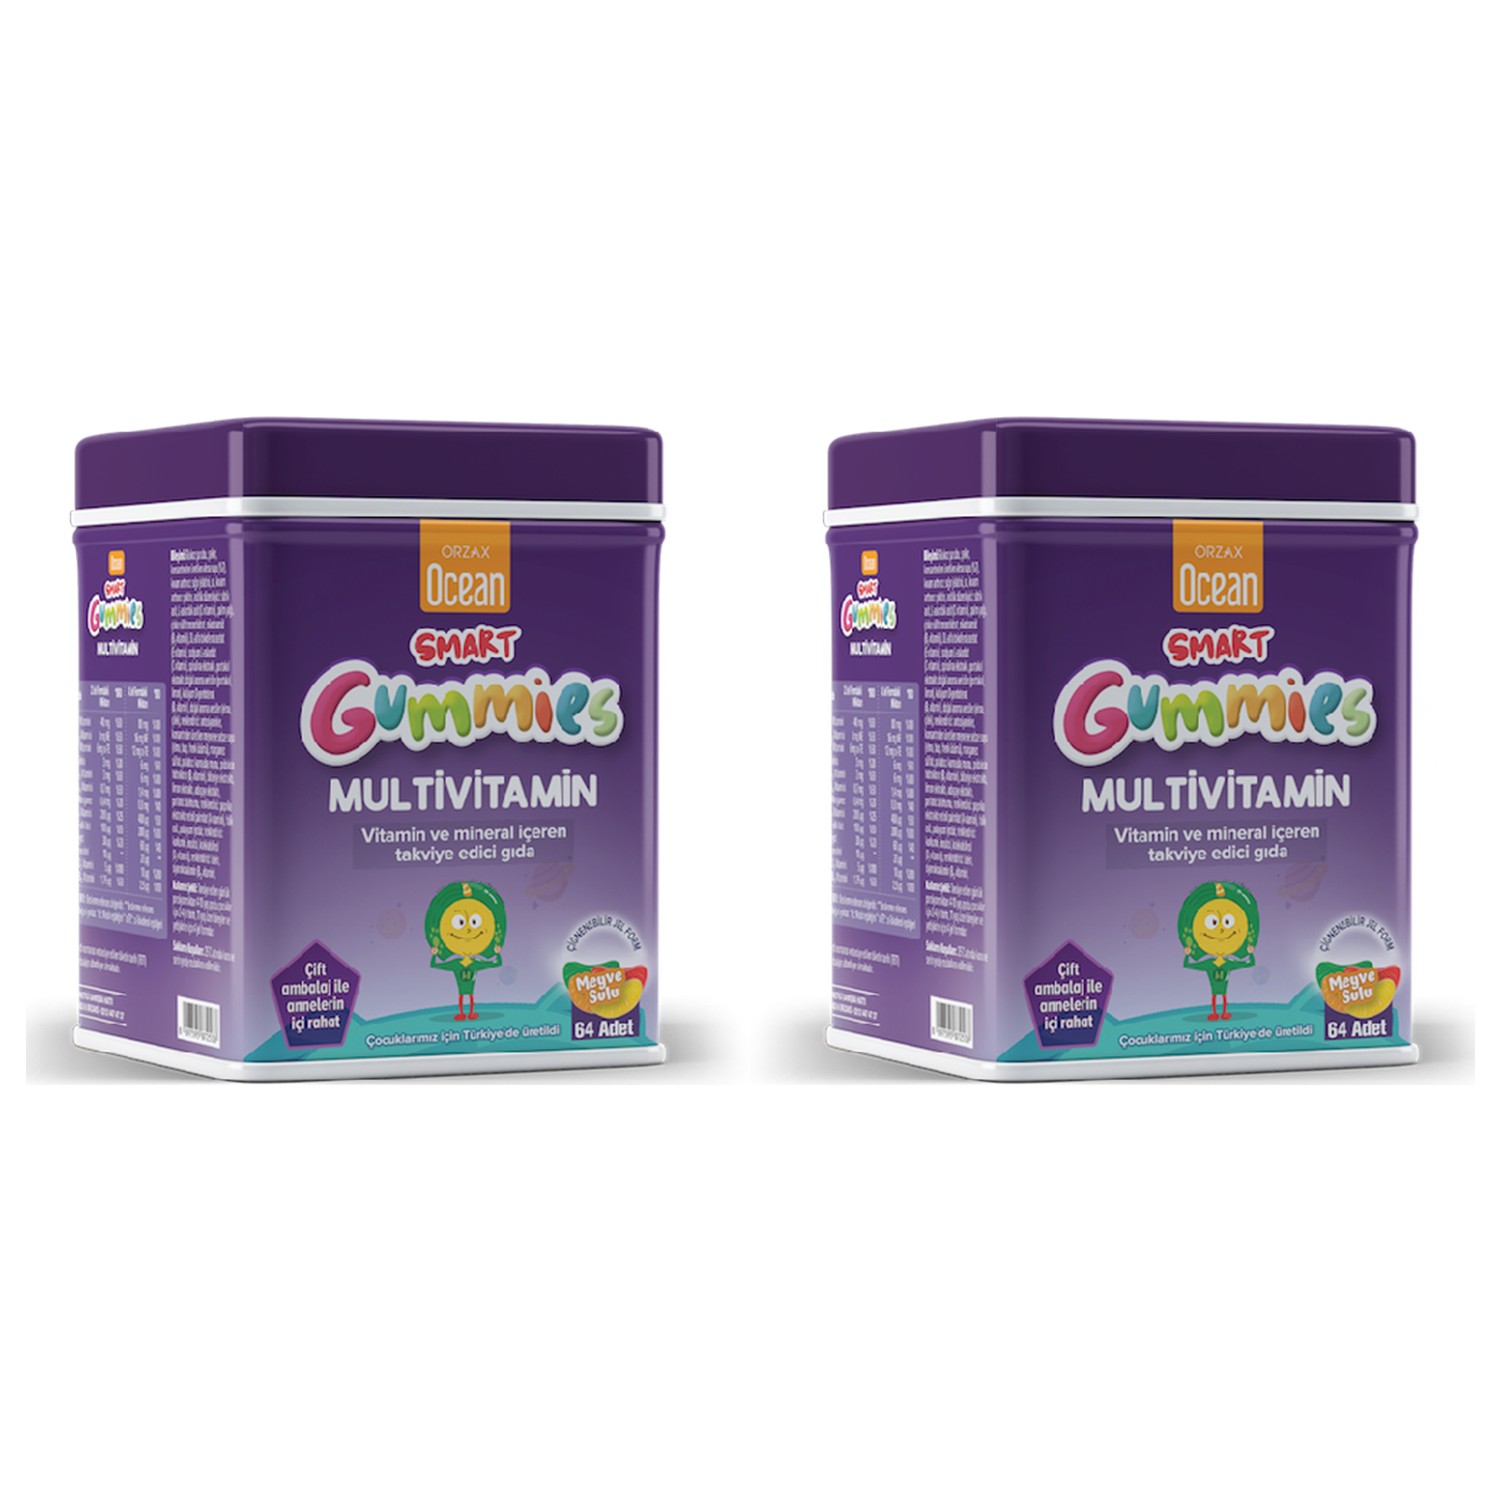 Пищевая добавка Orzax Ocean Smart Gummies Multivitamin Clenchable, 2 упаковки по 64 таблетки zenwise health women s organic probiotic gummies strawberry 45 gummies